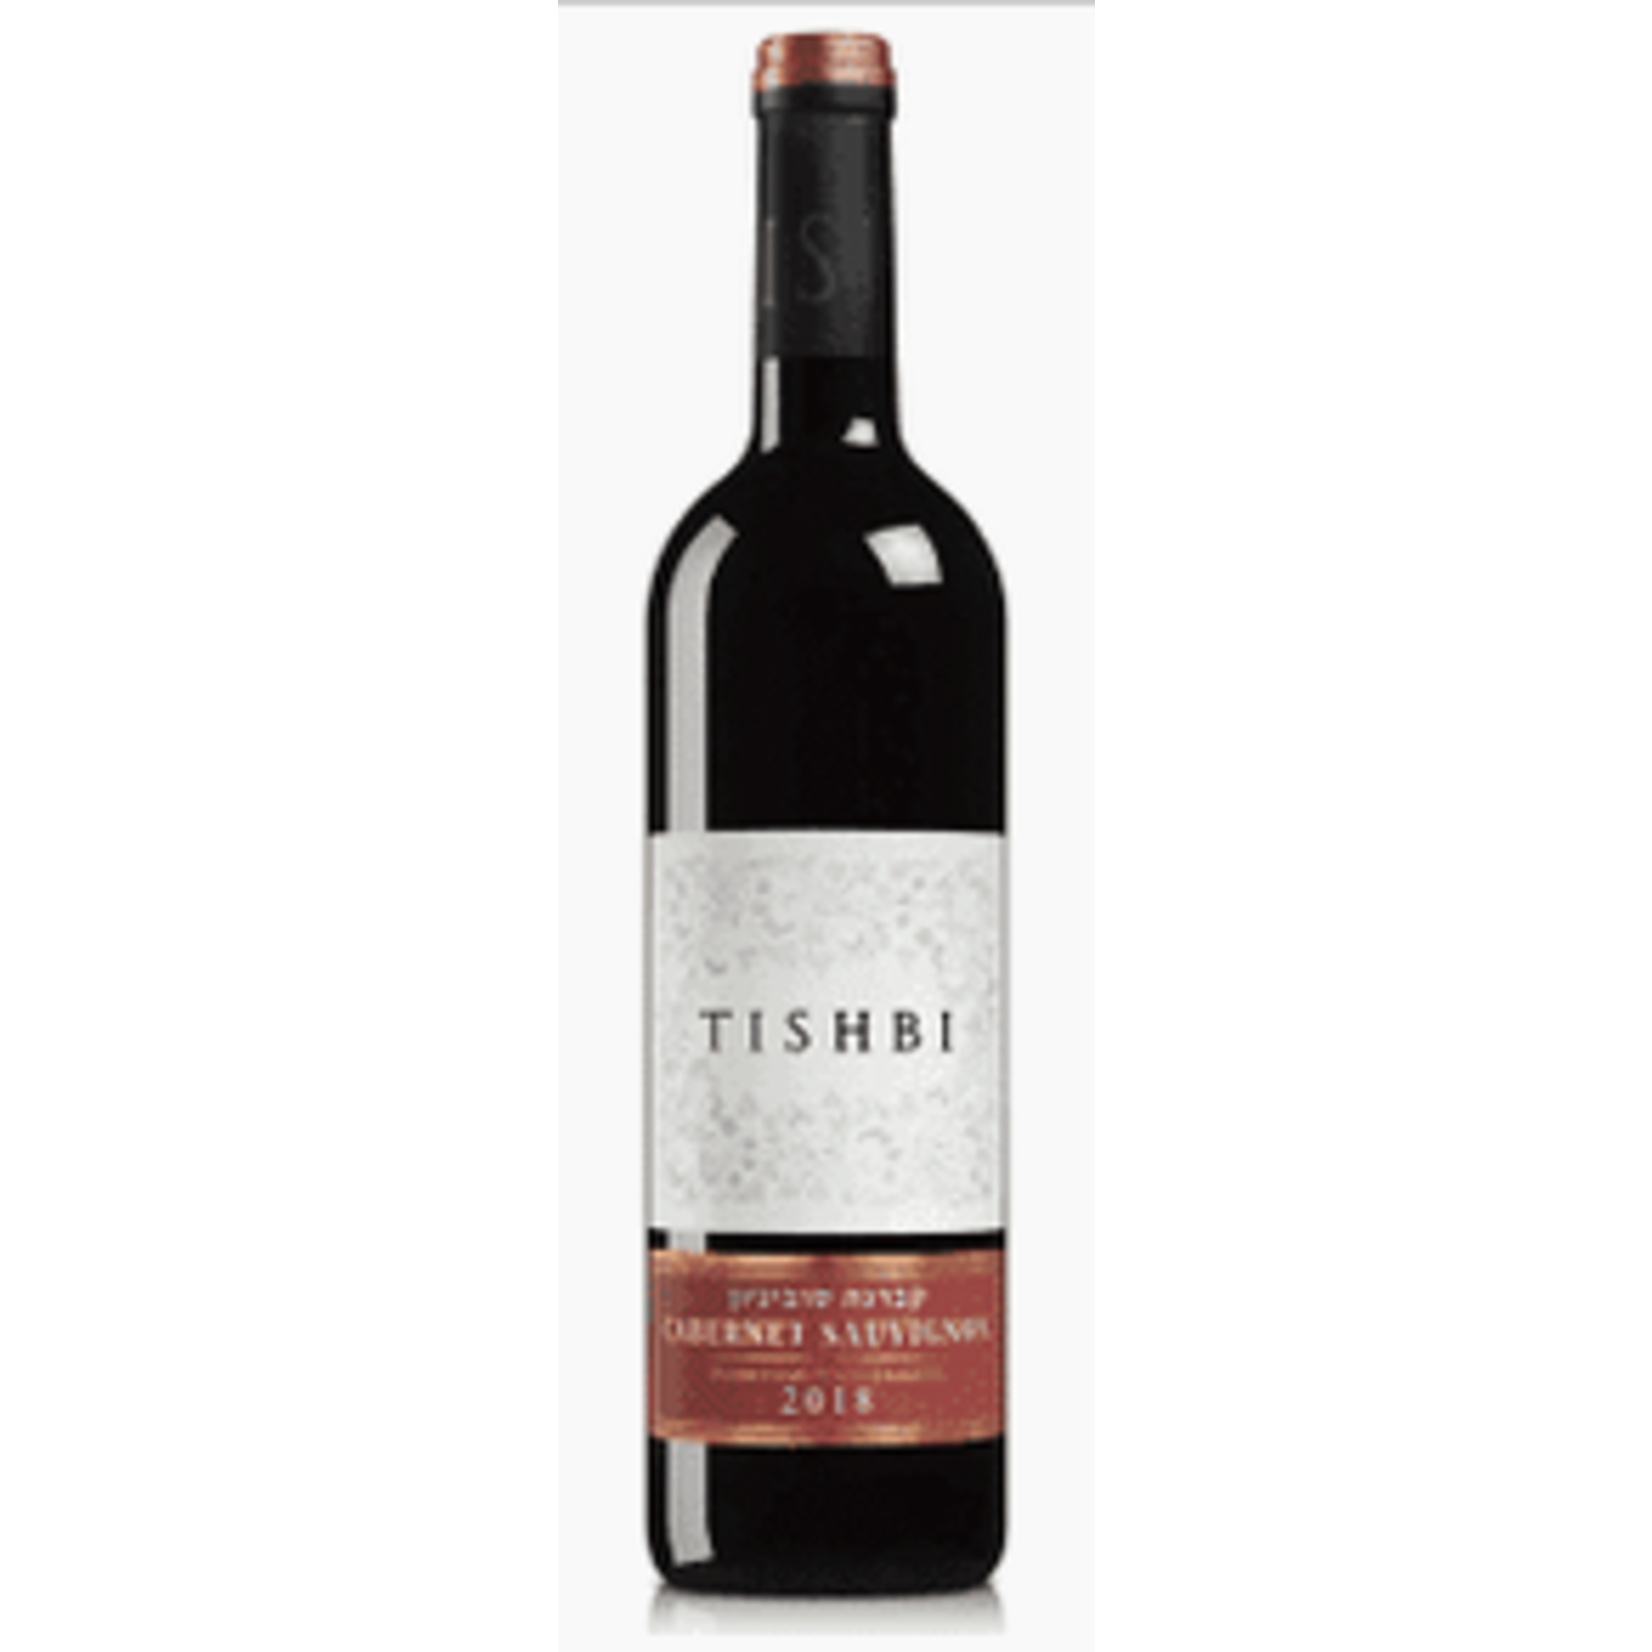 Tishibi Family Winemakers Tishbi Cabernet Sauvignon 2021 Kosher Judean Hills, Isreal